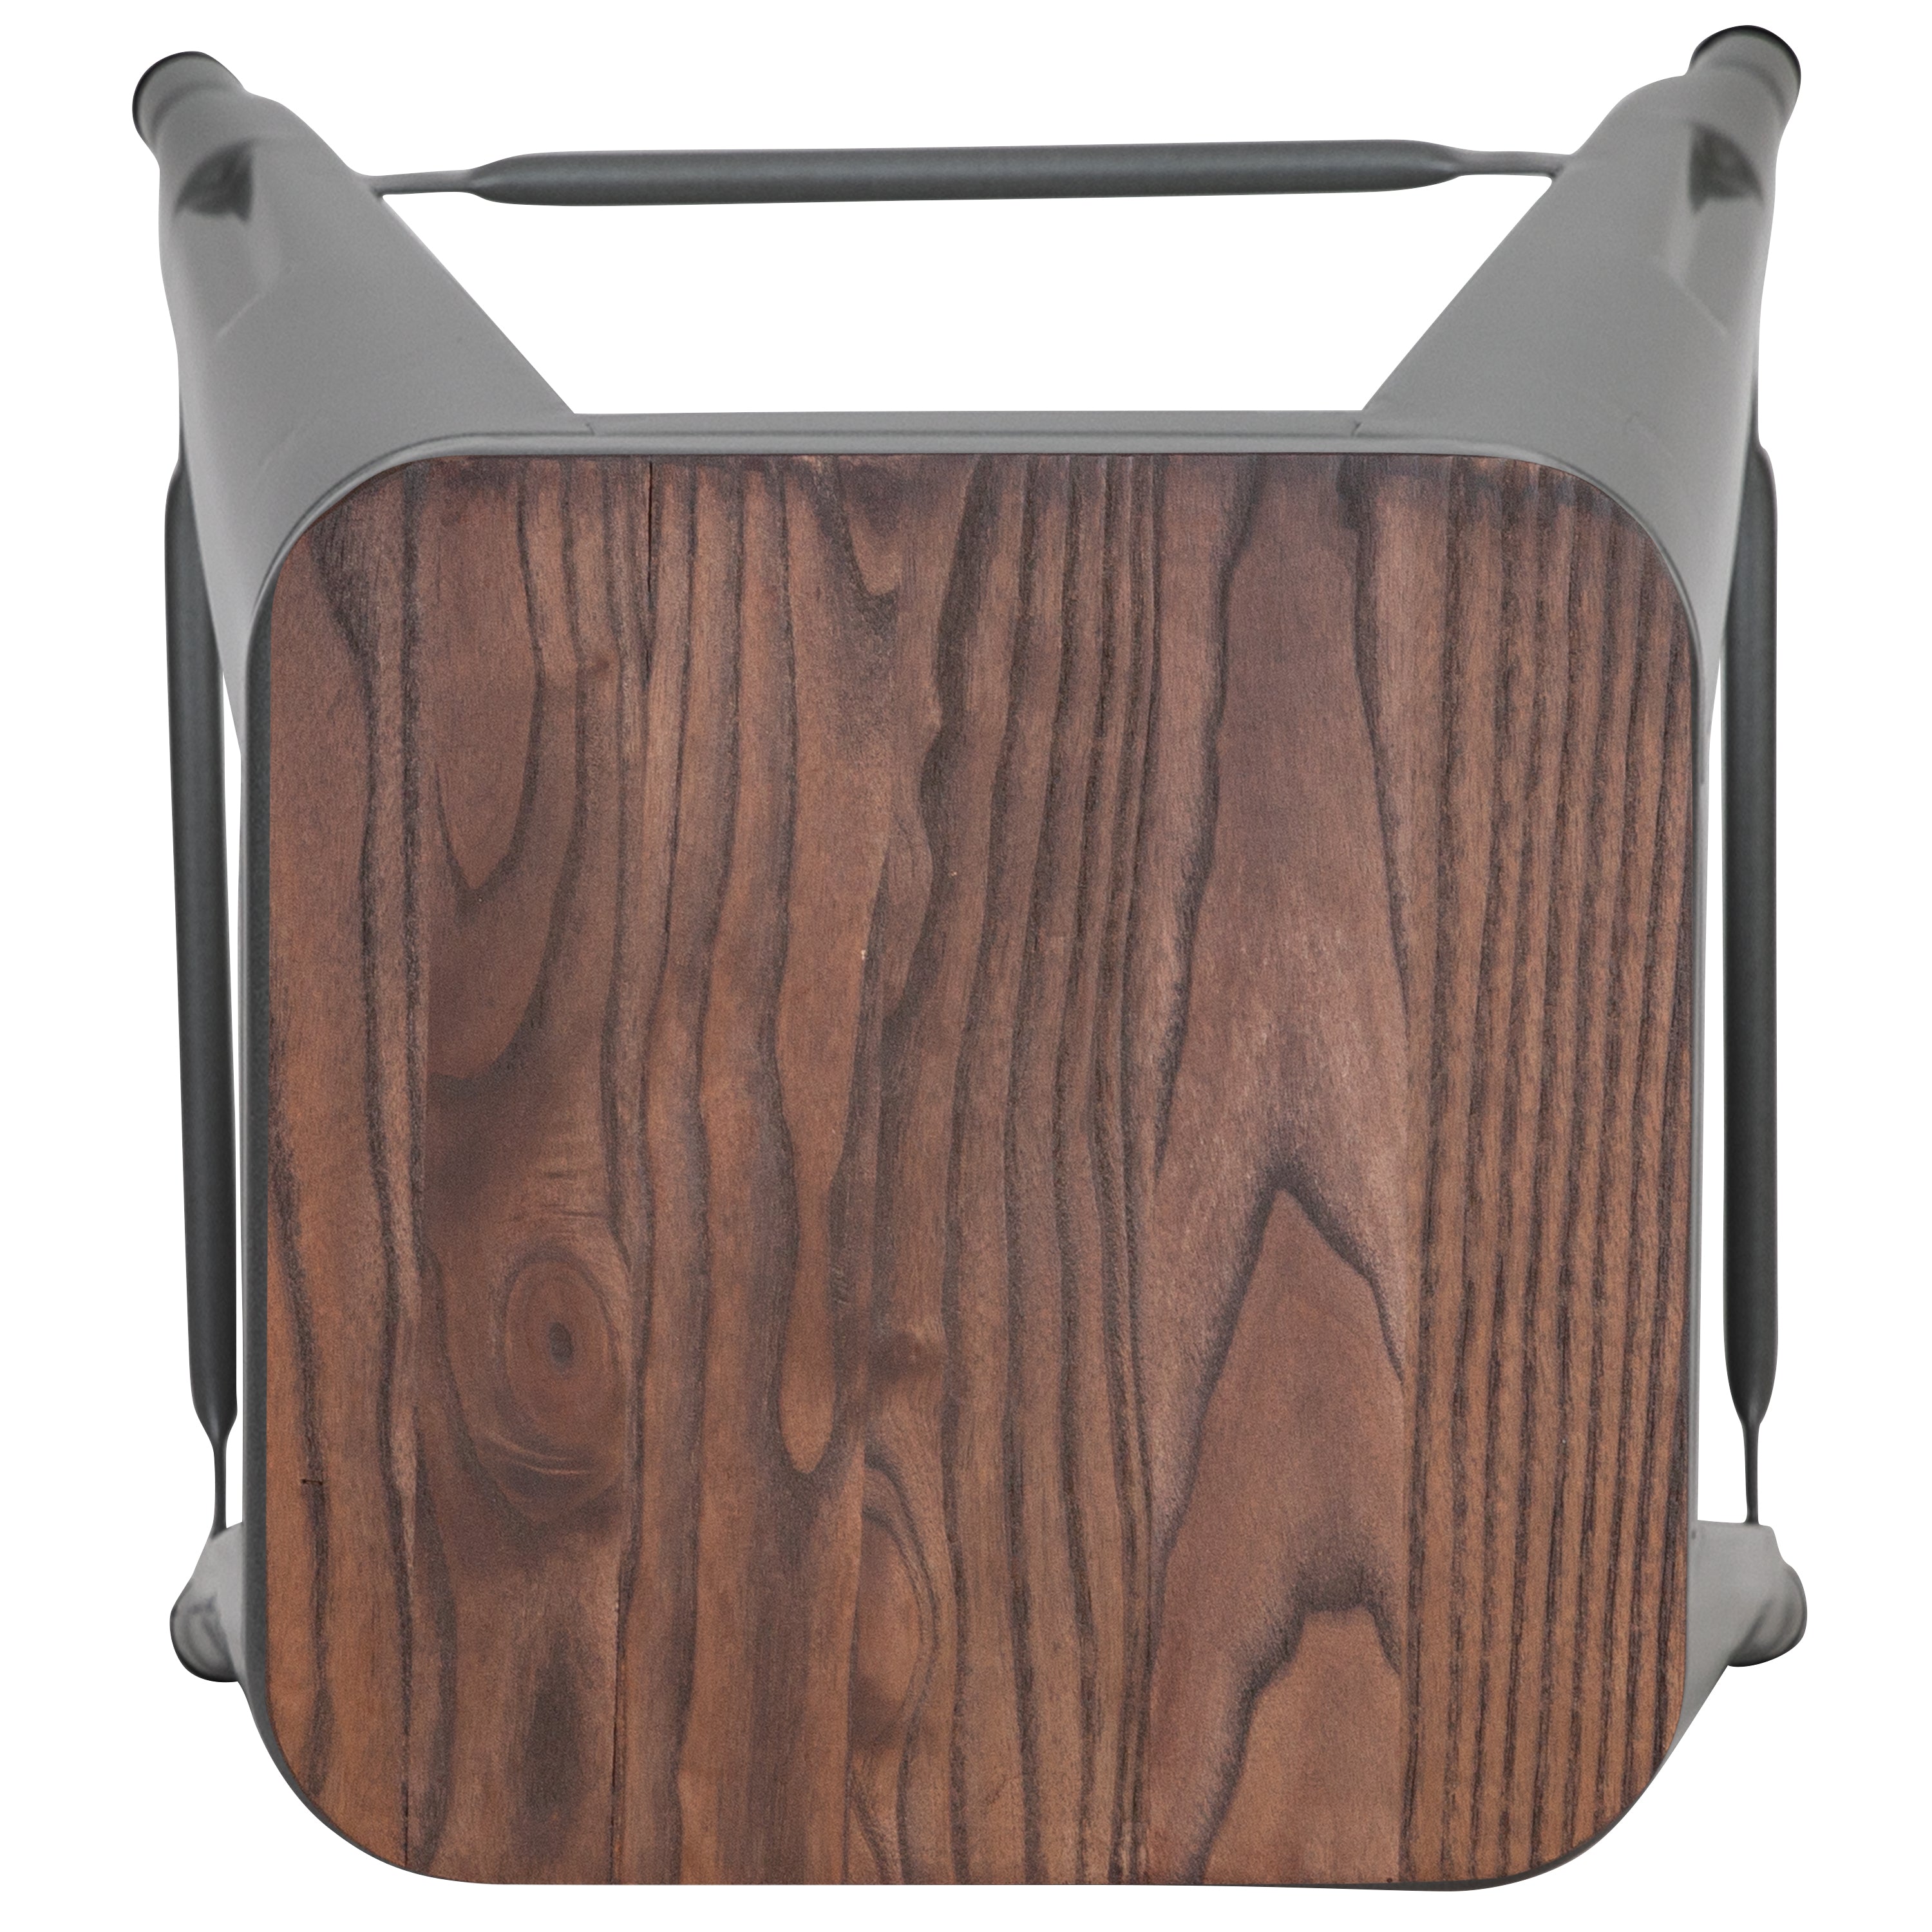 30" High Metal Indoor Bar Stool with Wood Seat - Stackable Set of 4-Indoor/Outdoor Bar Stool-Flash Furniture-Wall2Wall Furnishings